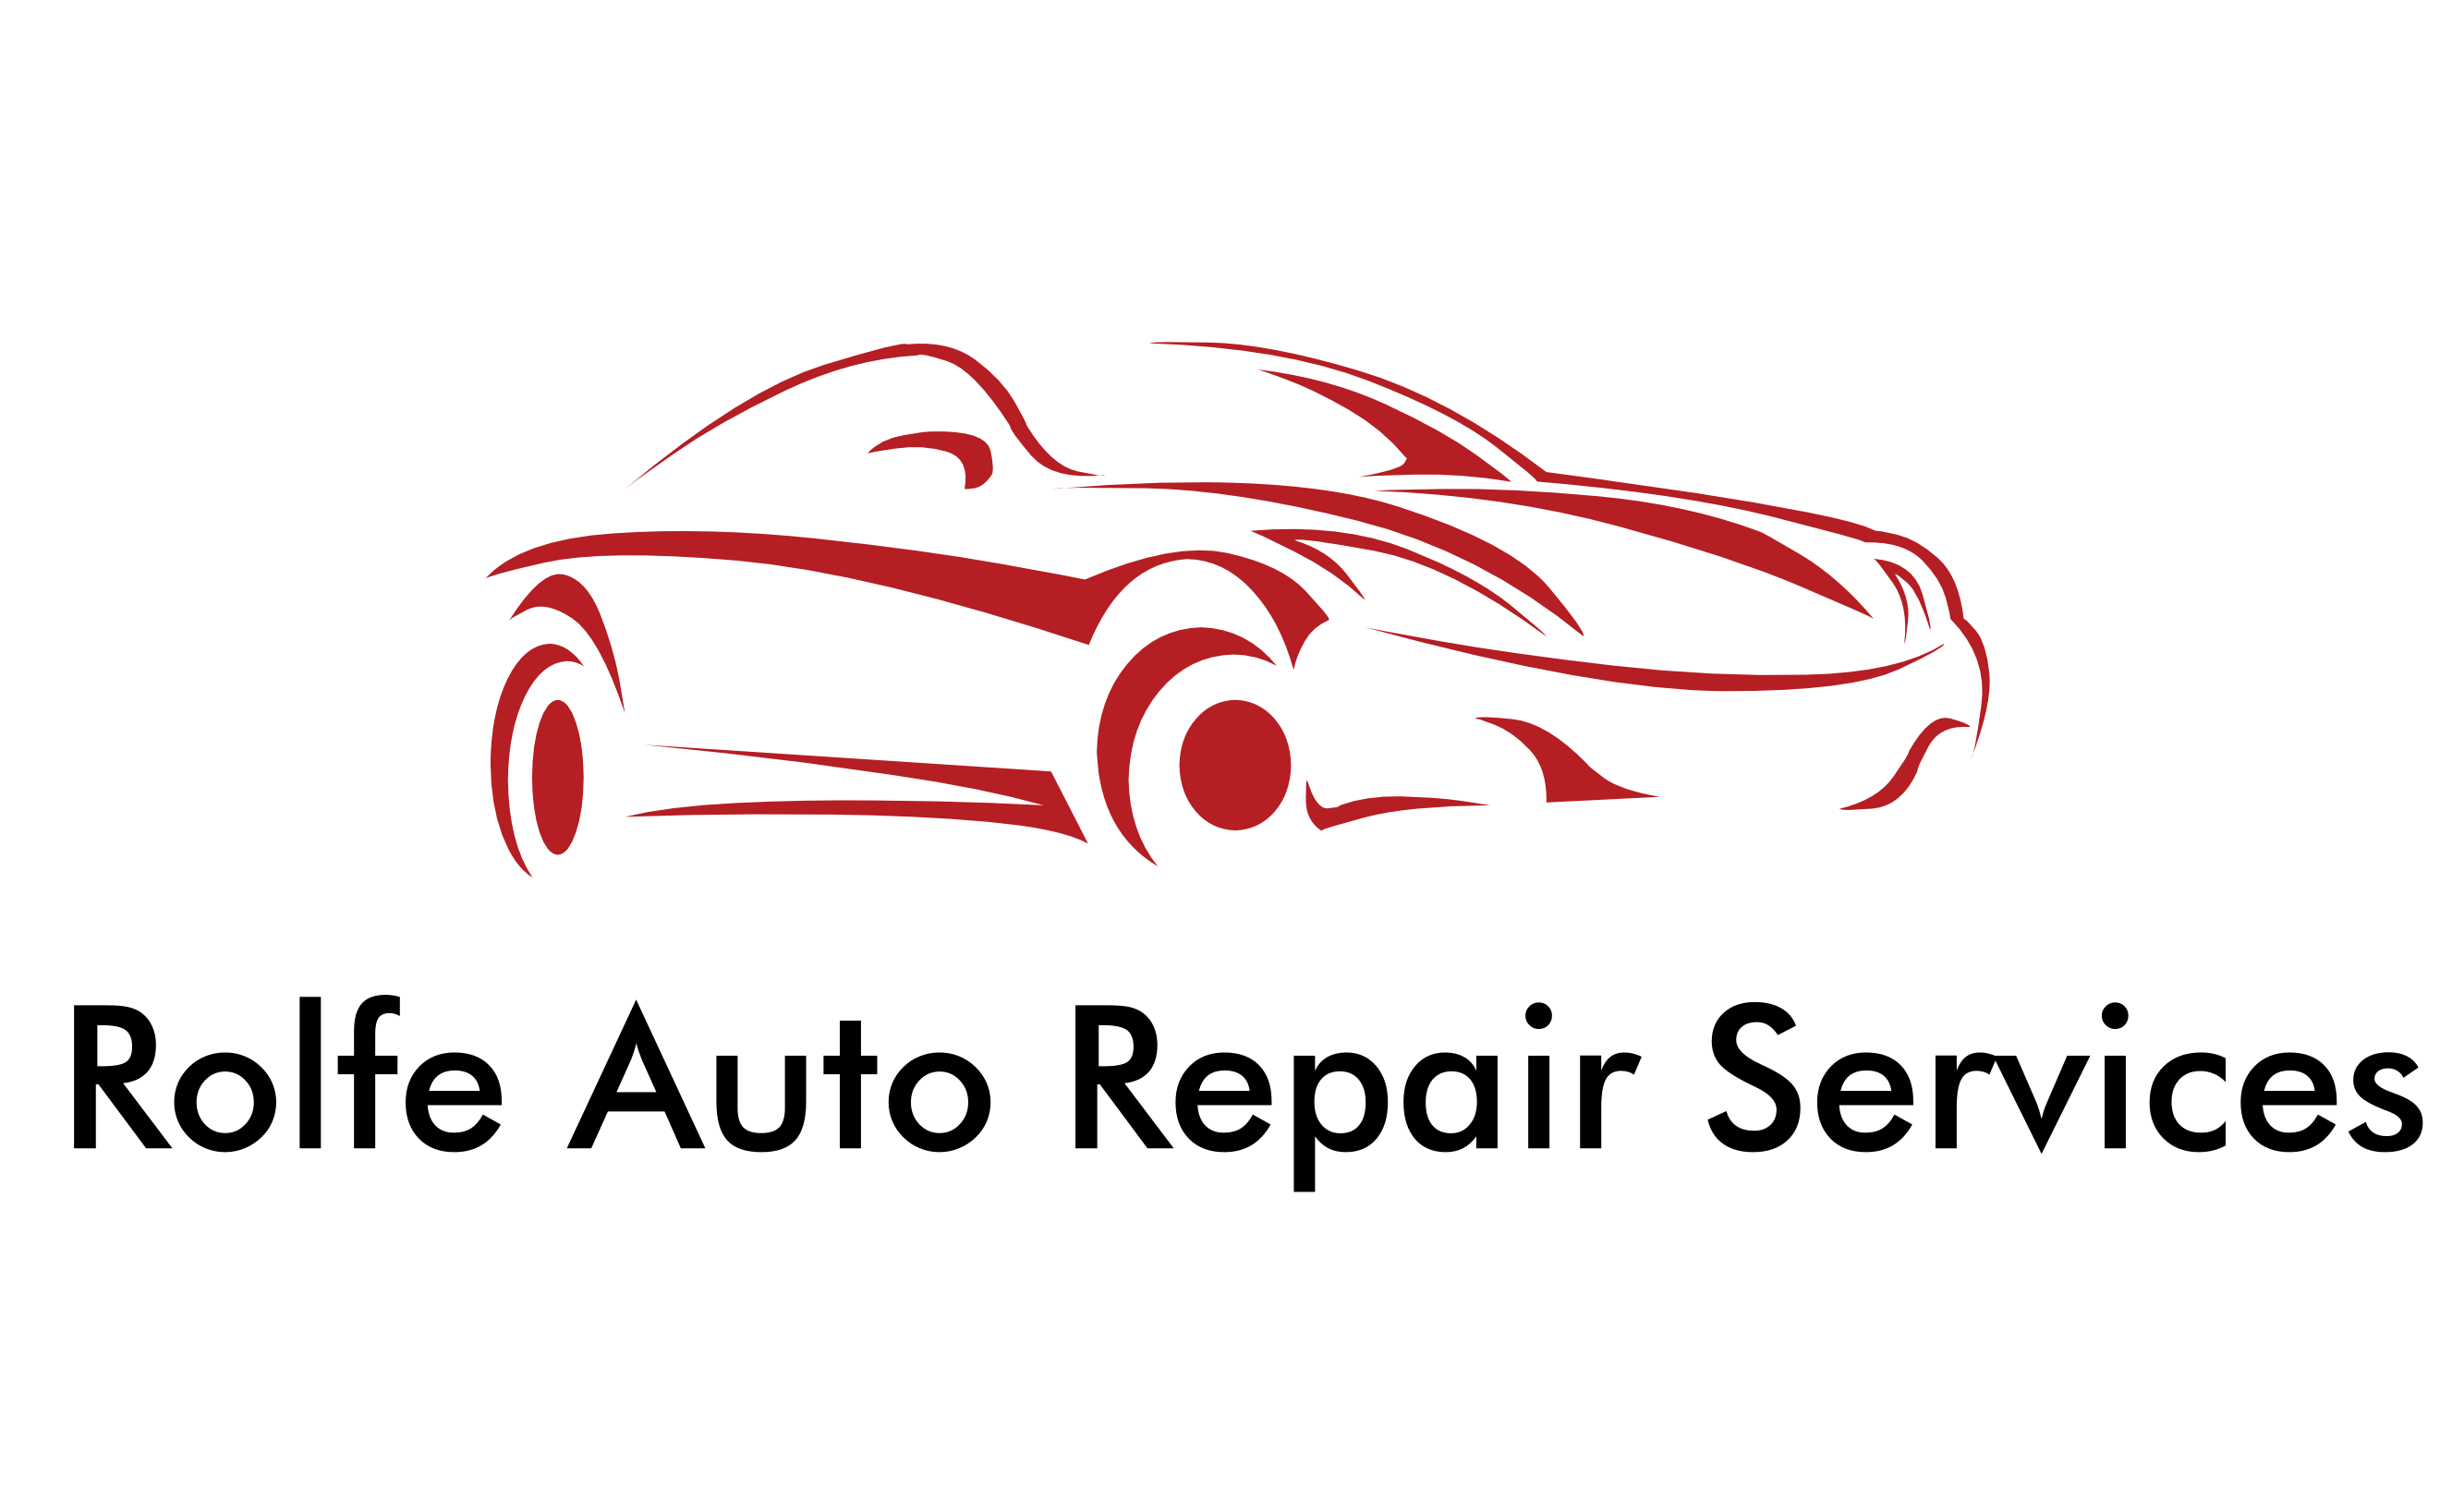 Automobile Repair Logo - Rolfe Auto Repair Services Mechanical Repairs, Vehicle Repairs ...